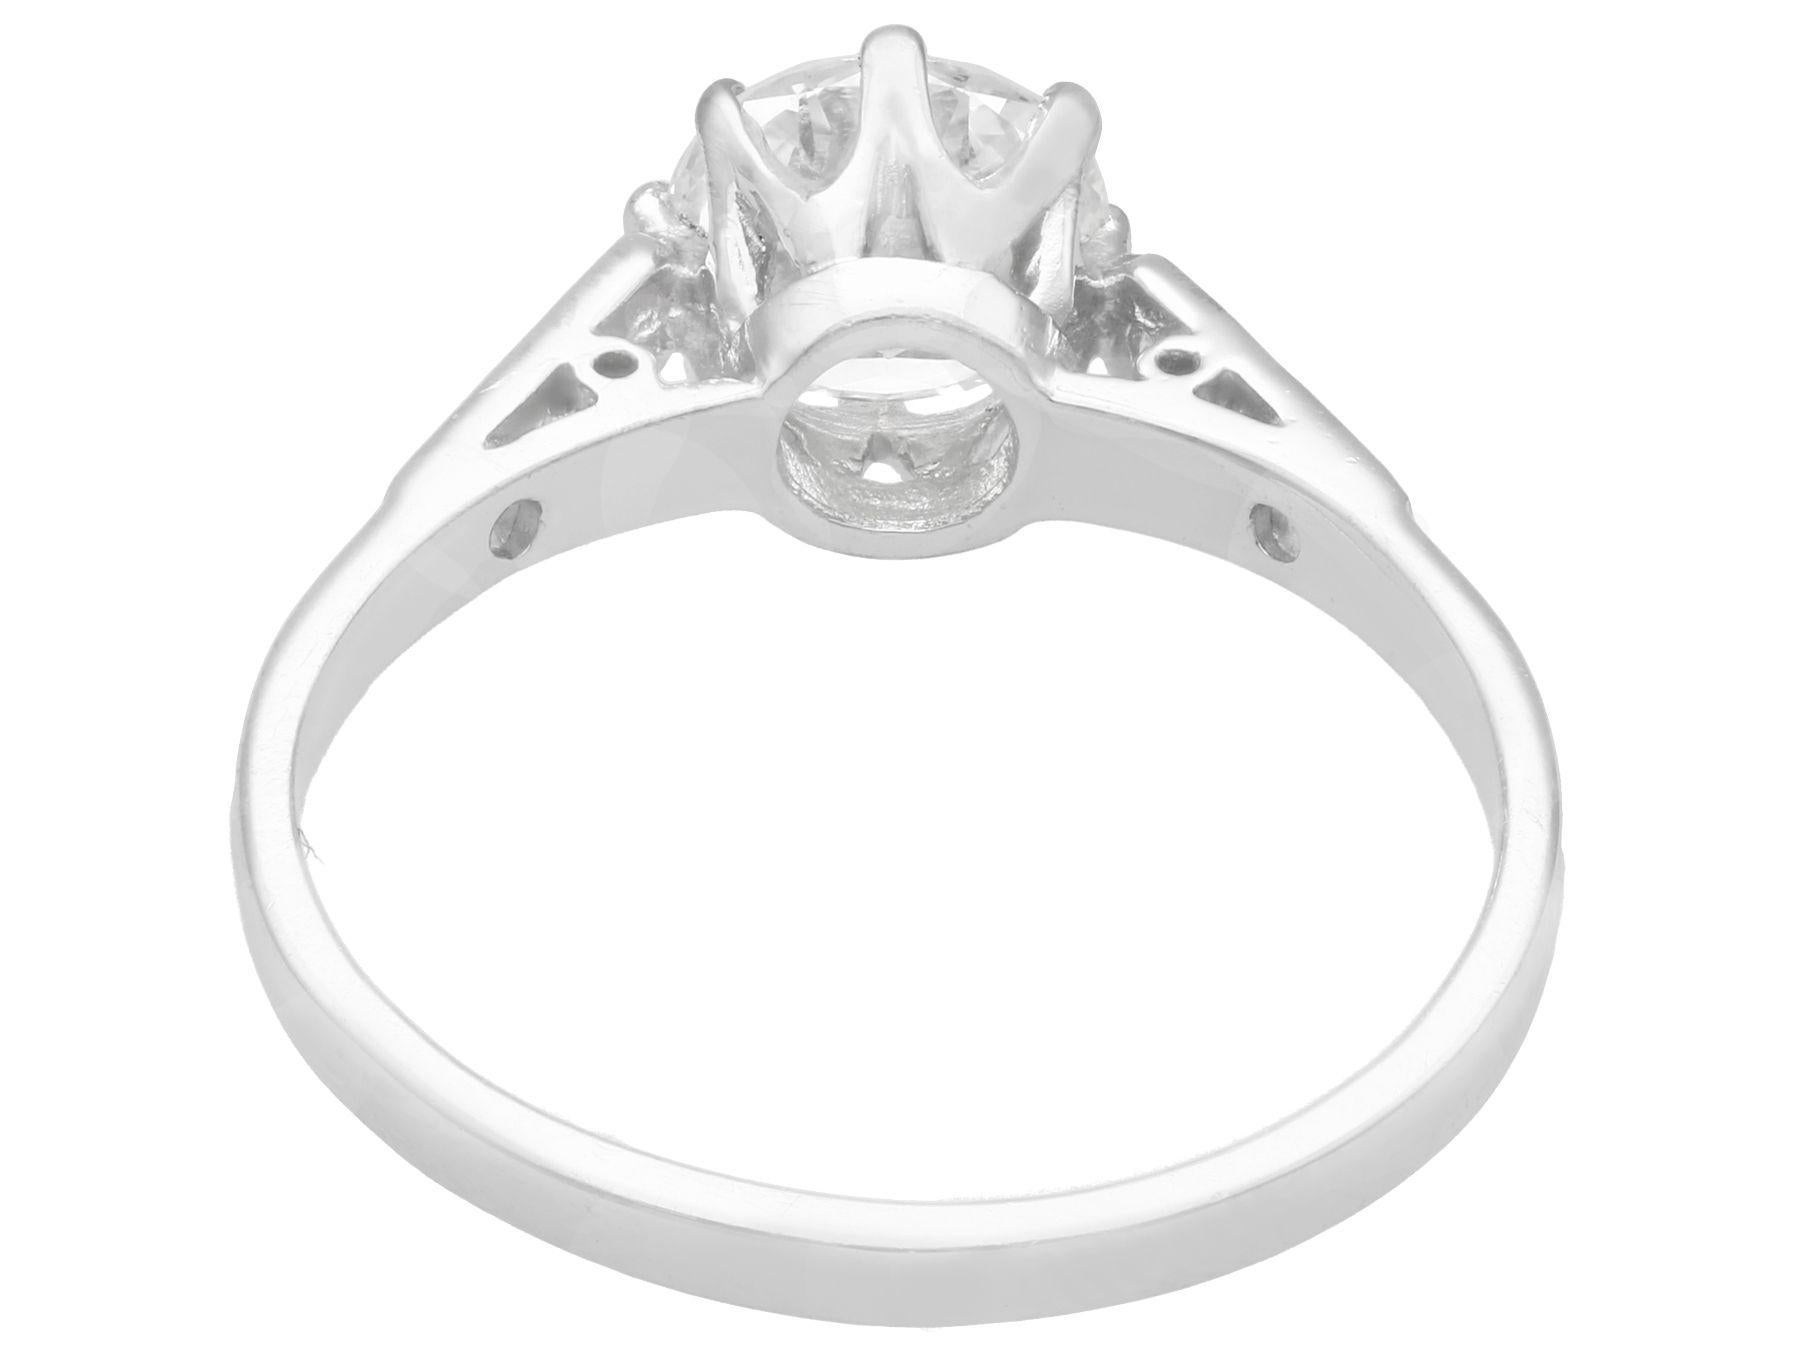 1.12 carat diamond ring